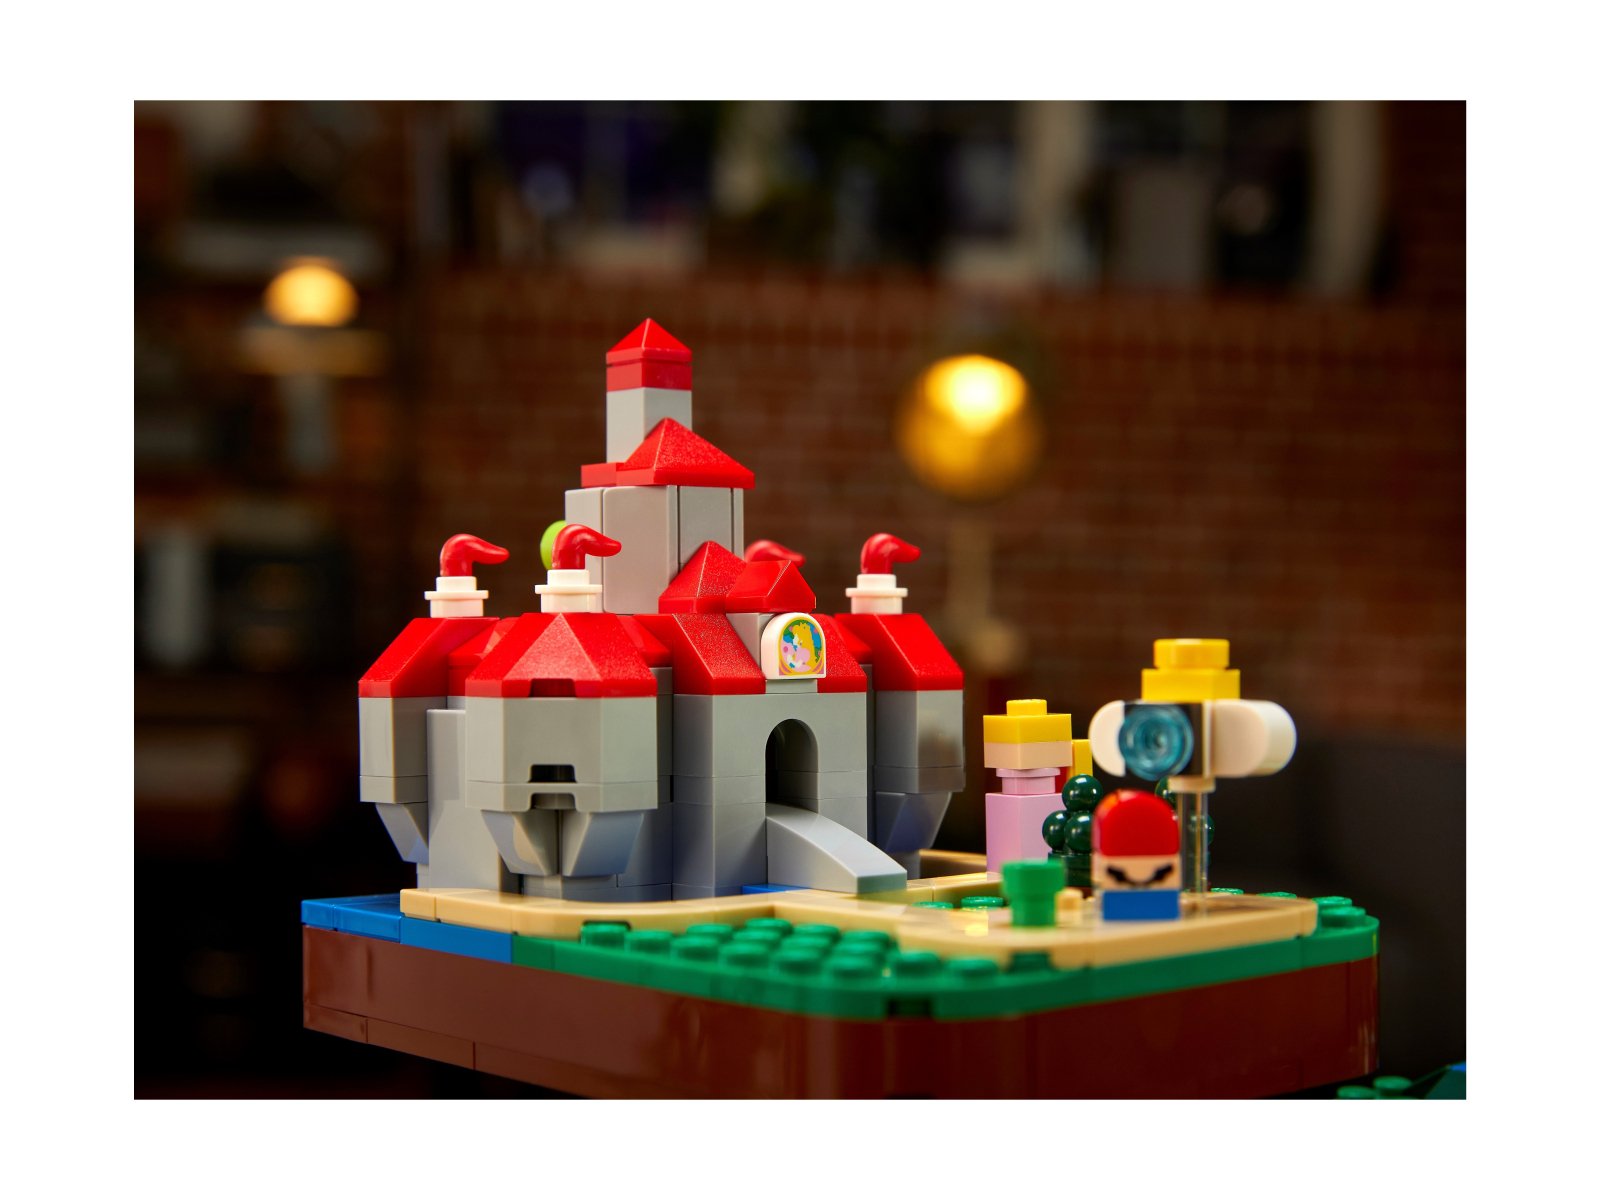 LEGO Super Mario Pytajnikowy blok Super Mario 64™ 71395